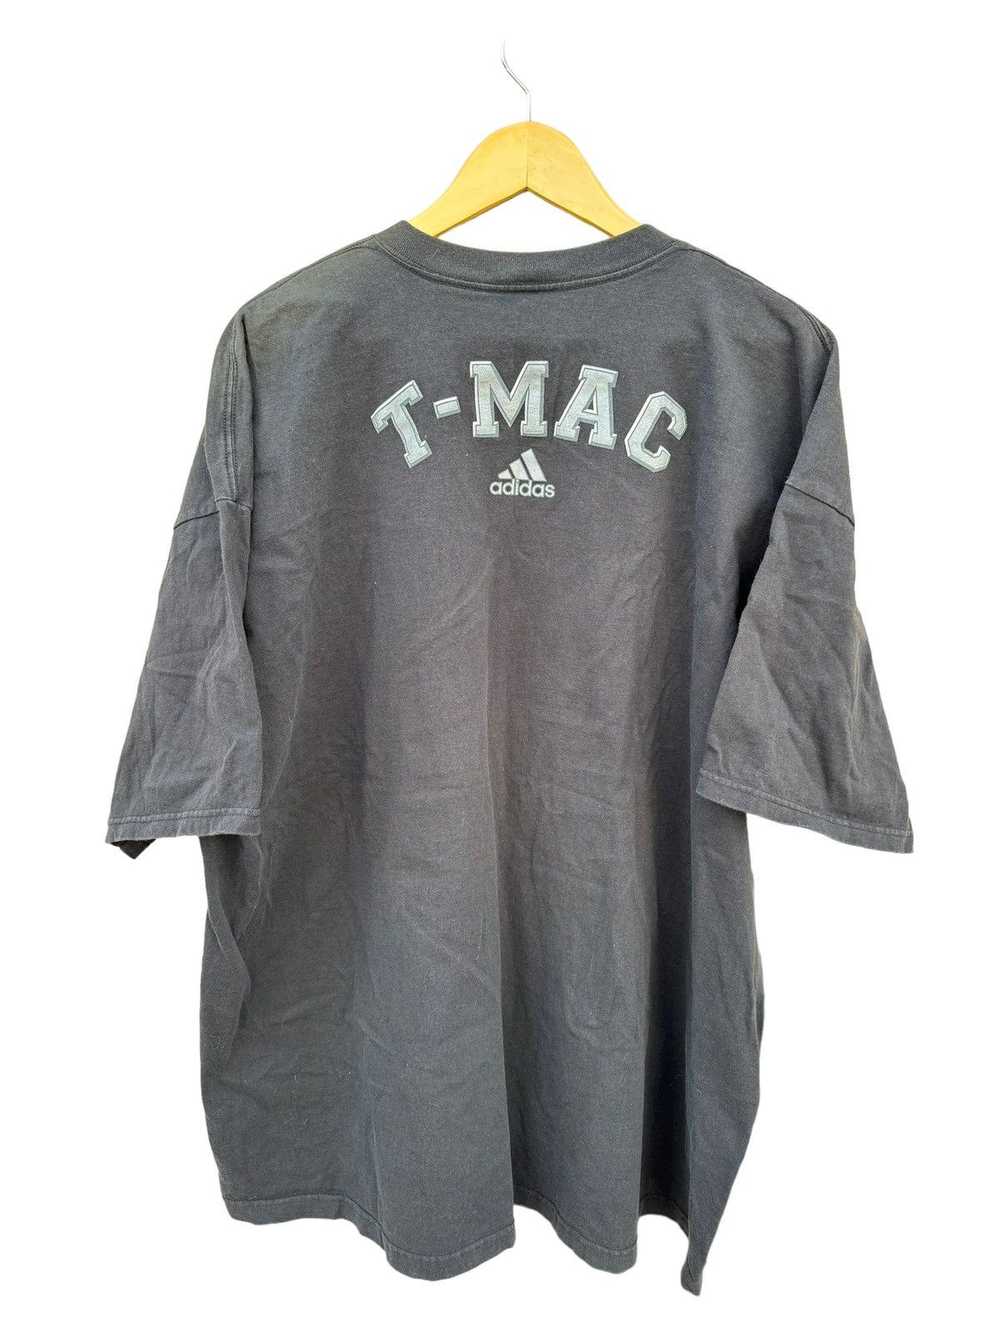 Adidas Vintage adidas t-Mac shirt rare black magic - image 2